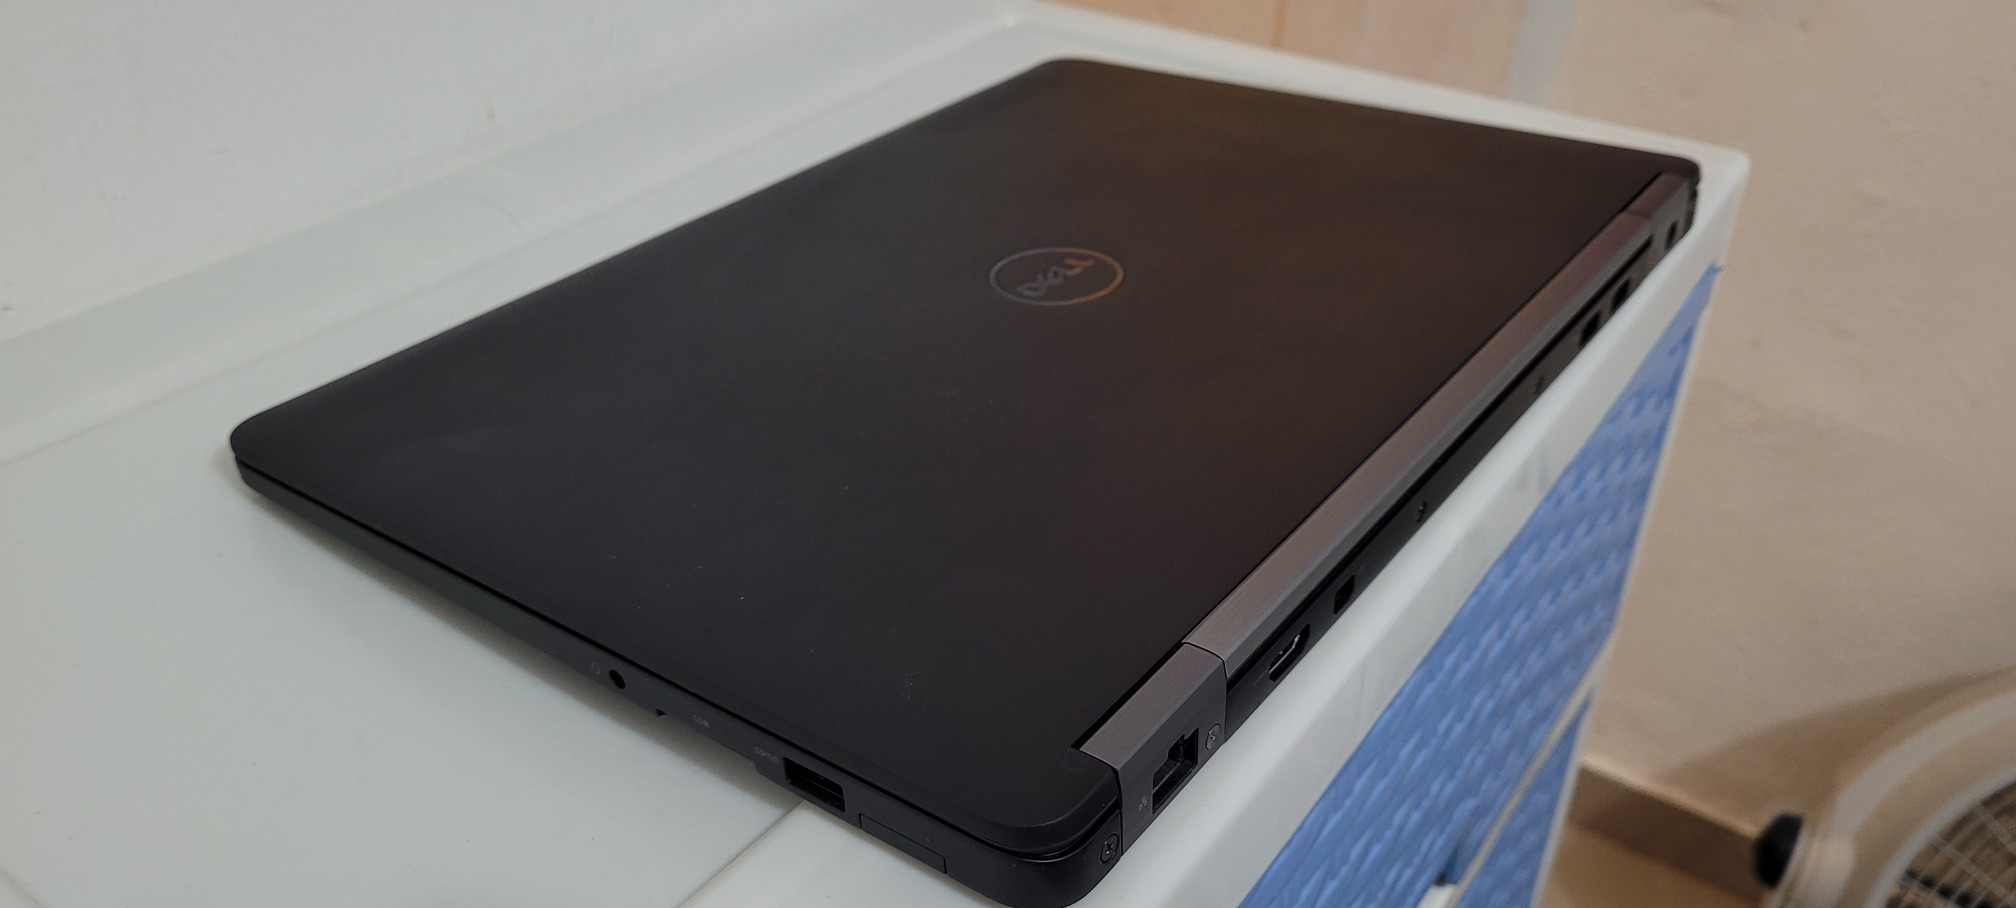 computadoras y laptops - Dell 7480 14 Pulg Core i5 7ma Ram 8gb ddr4 Disco 128gb SSD Solido full 2